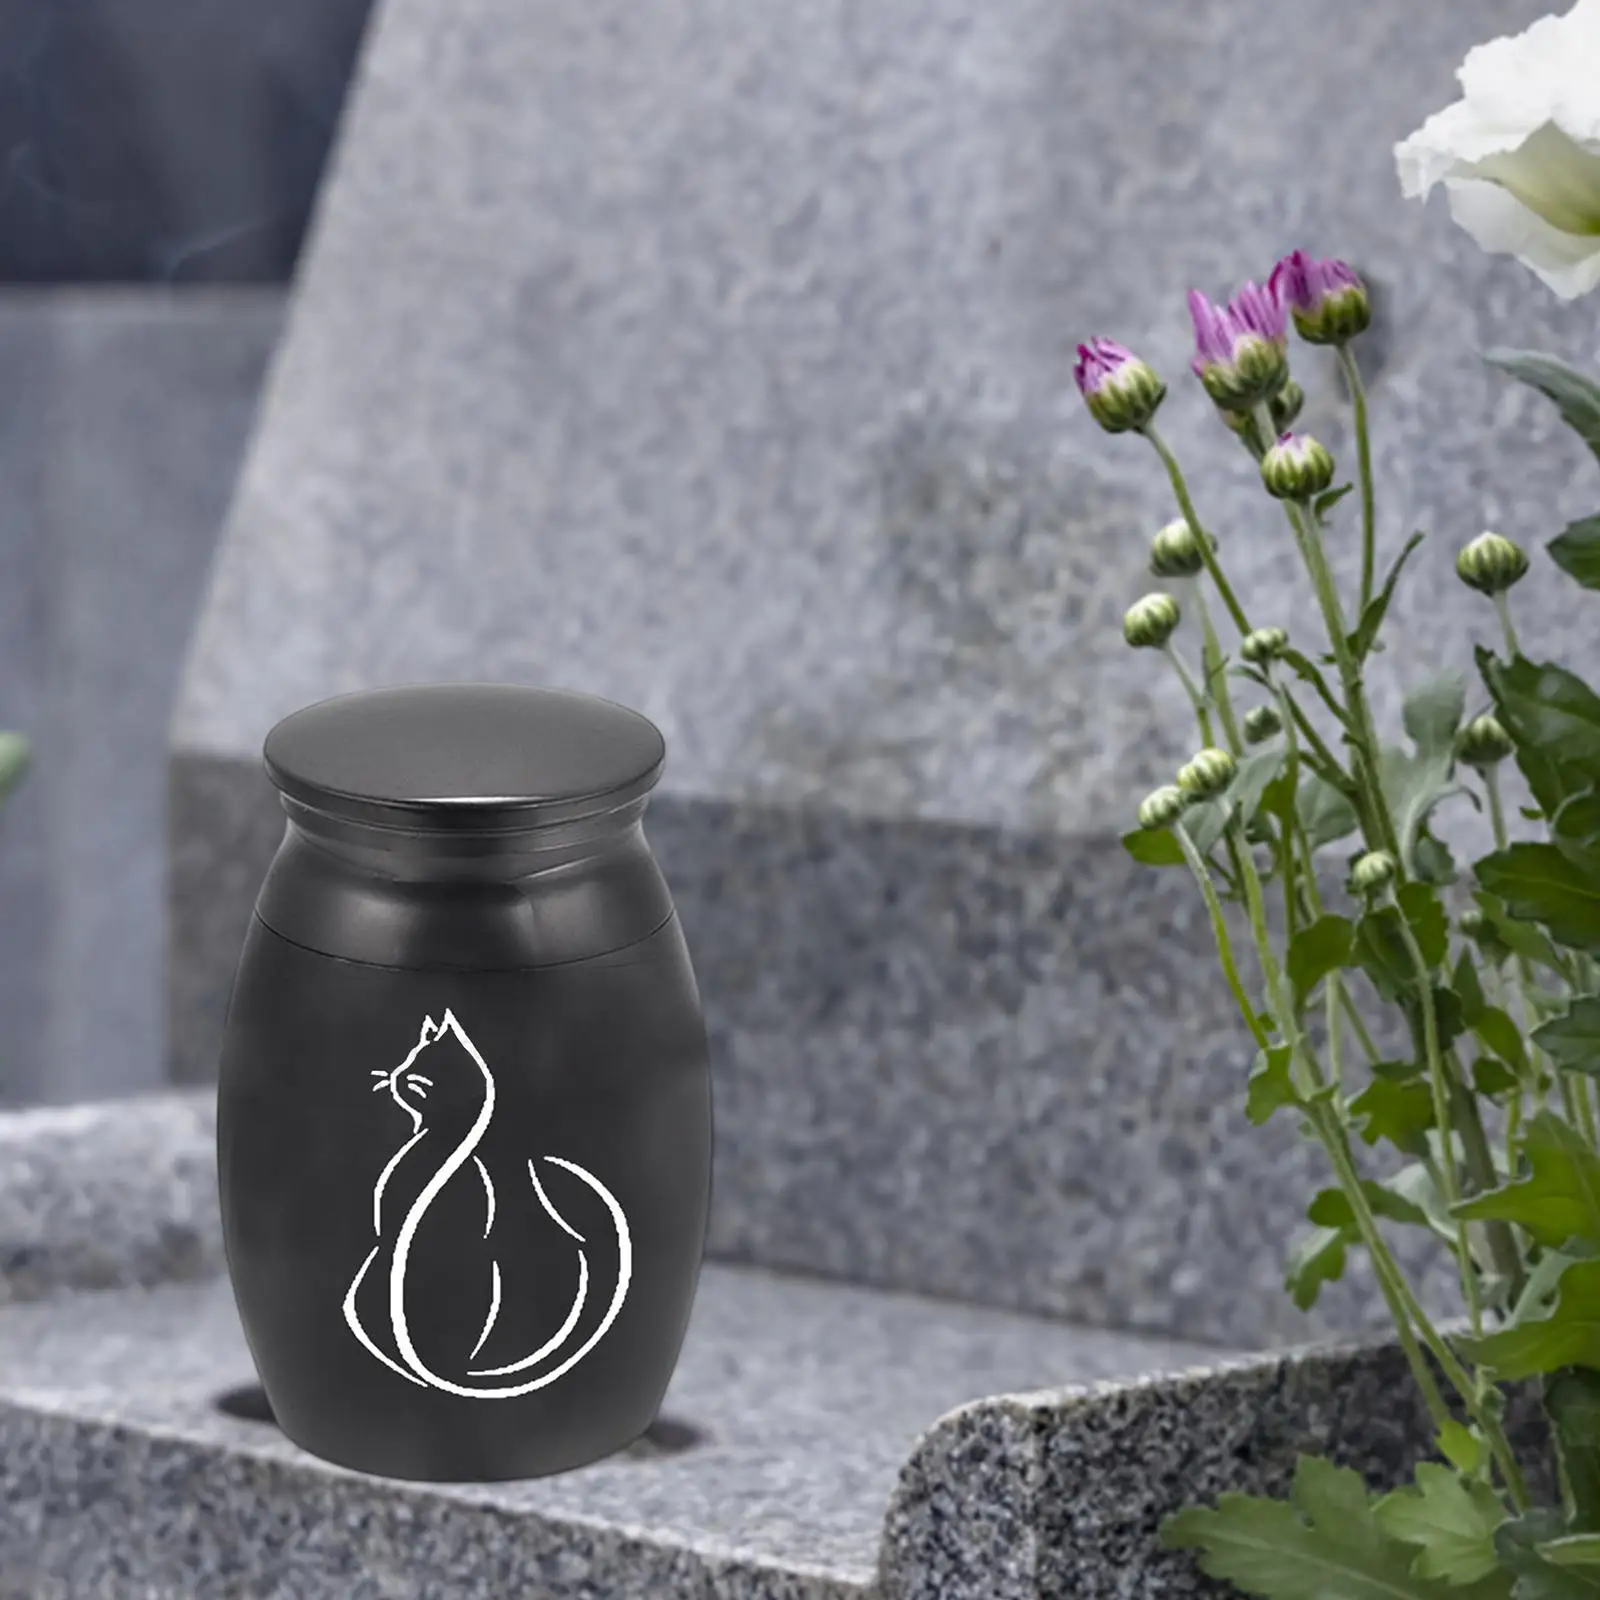 Pet Urn Casket Pet Cremation Urn for Small Animals Funerary Caskets Supplies